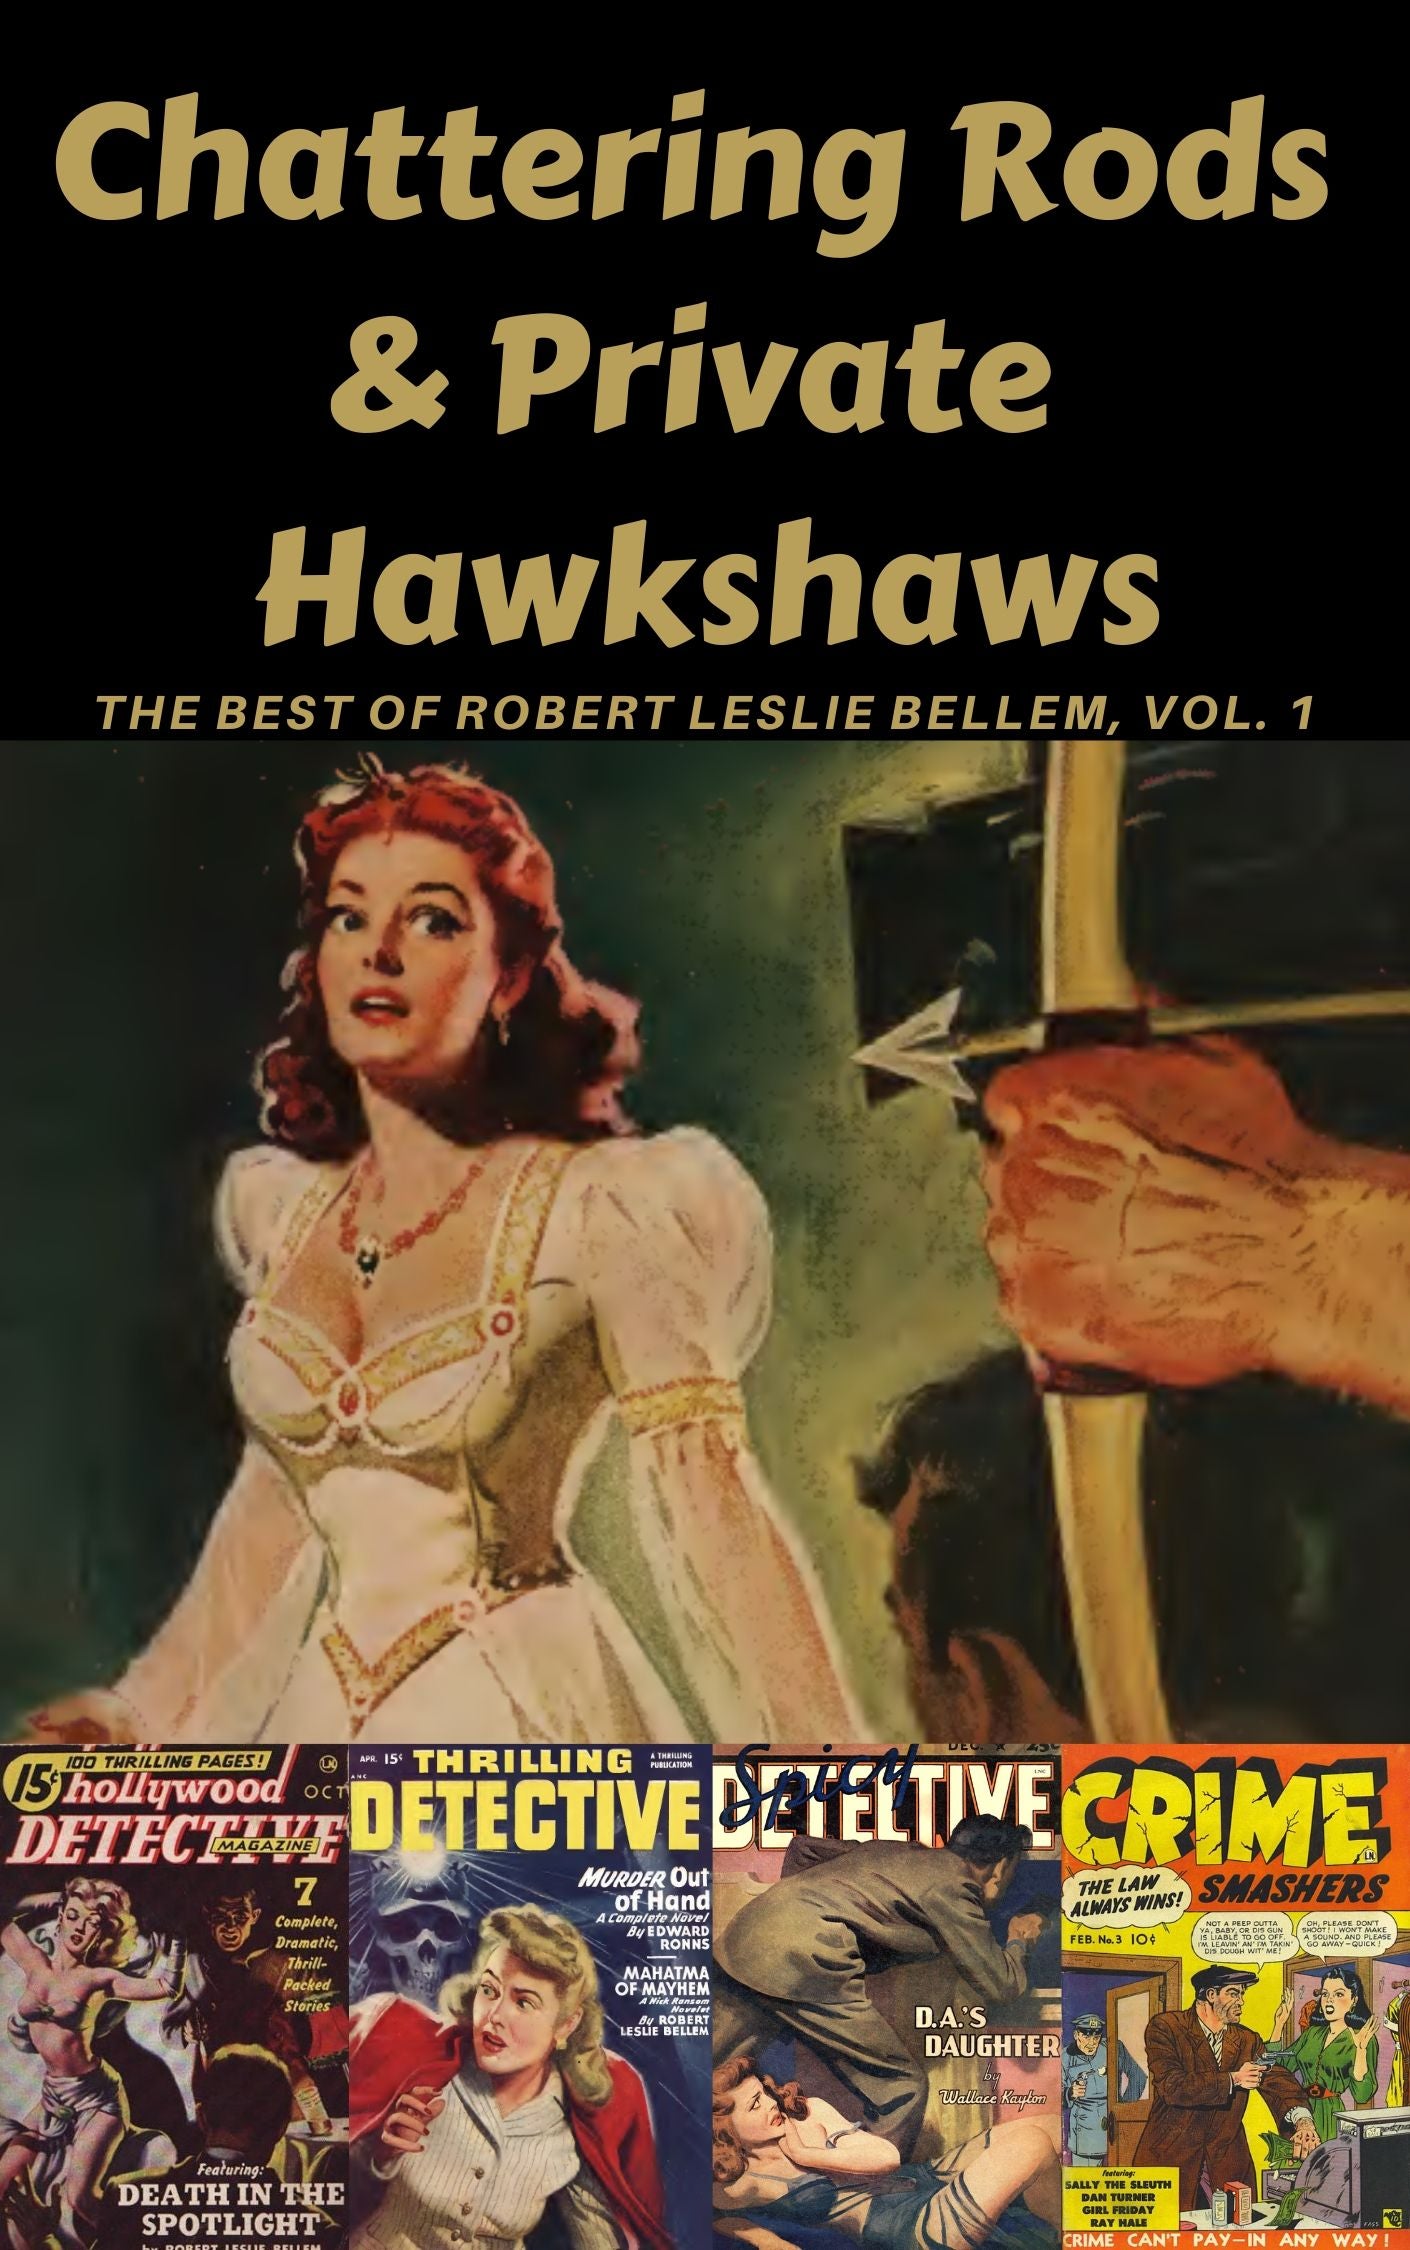 Chattering Rods & Private Hawkshaws: The Best of Robert Leslie Bellem, Vol. 1